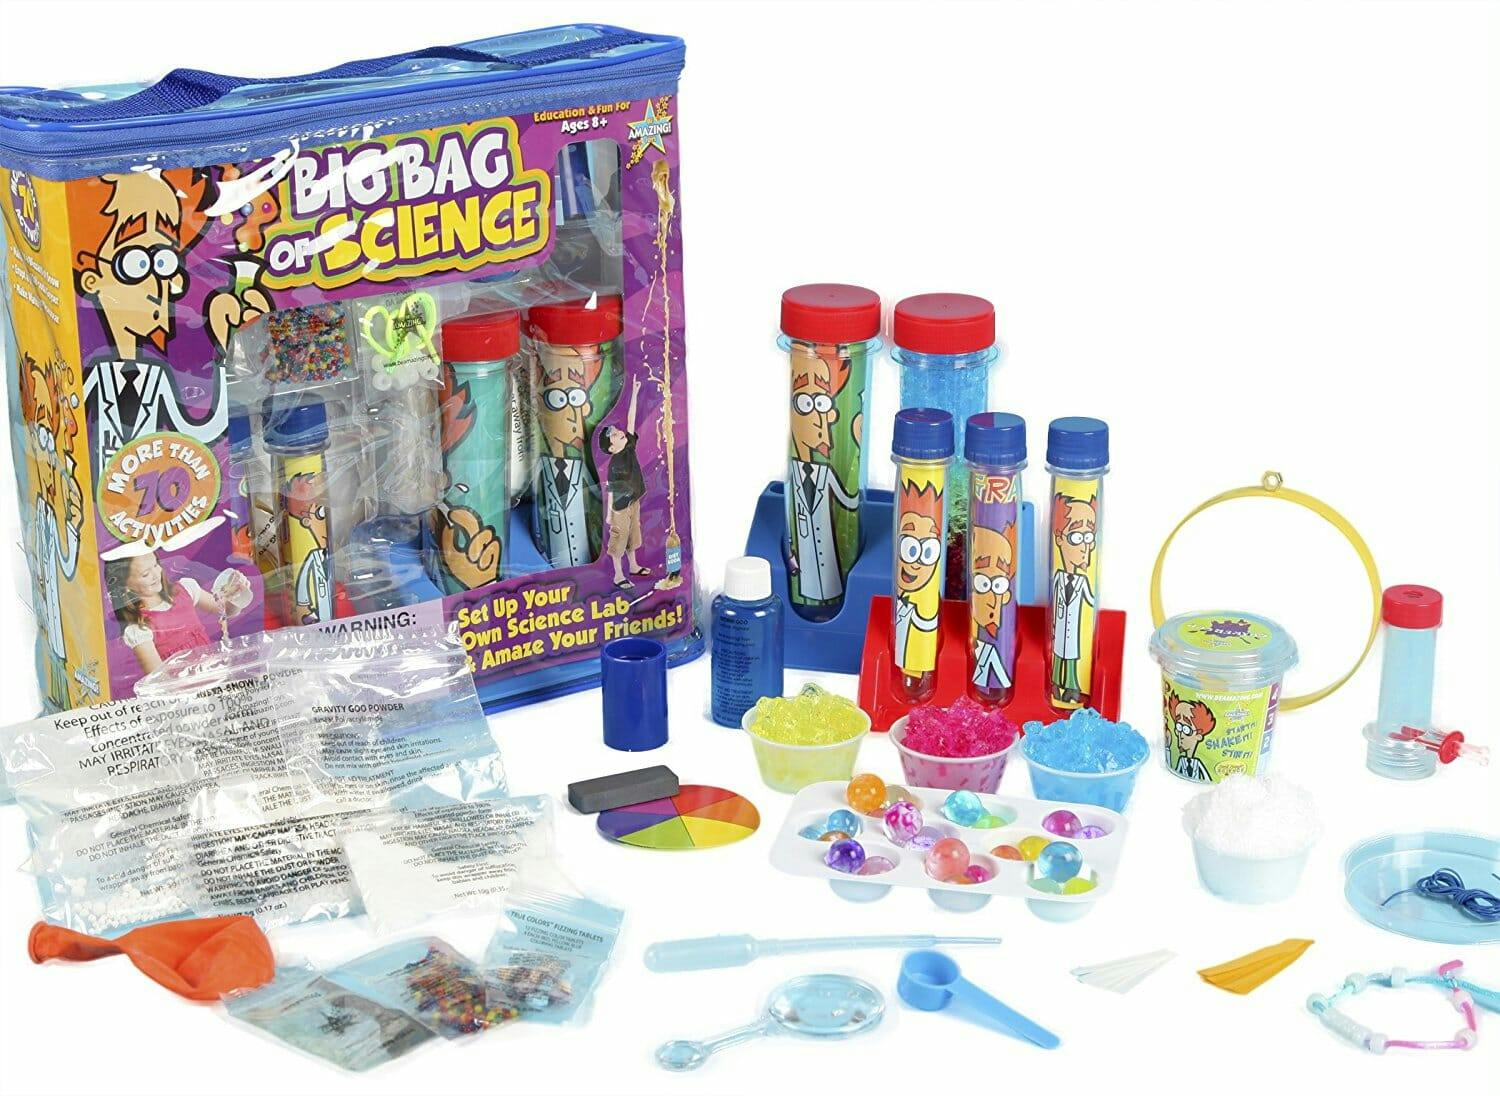 STEM toys